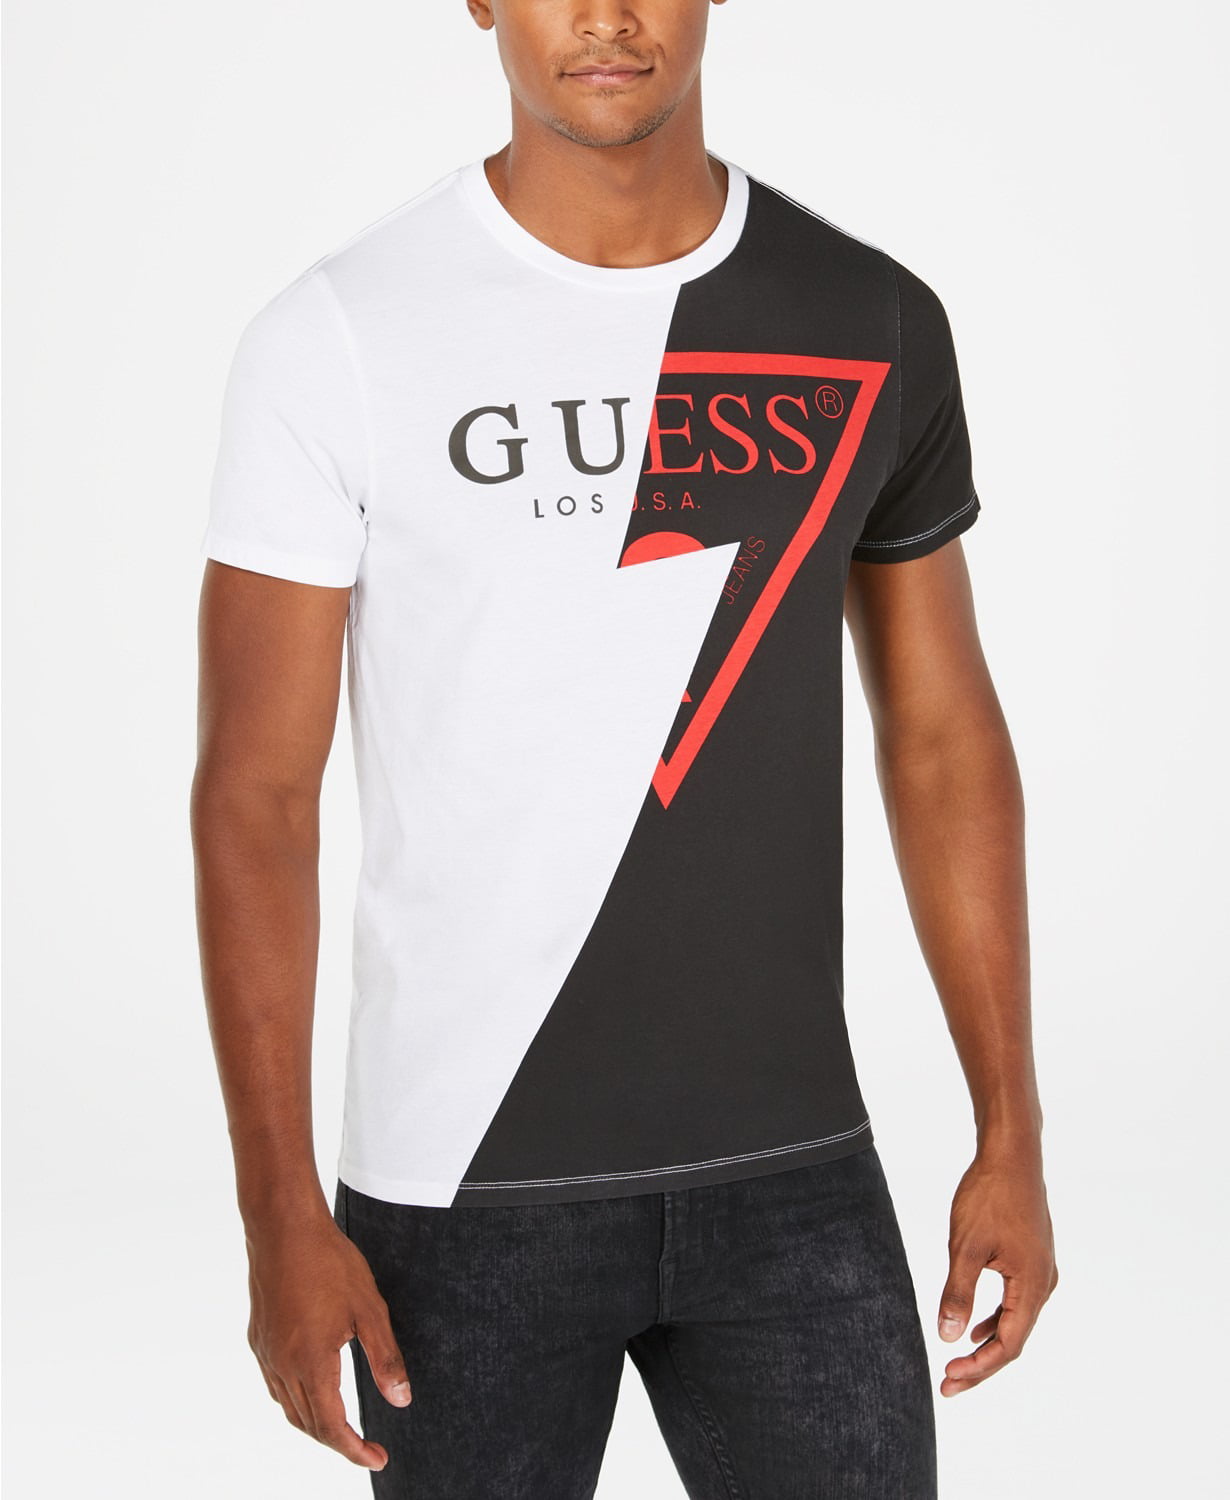 Guess T-Shirts - Mens Shirt Spliced Signature Graphic Crewneck Tee XL ...